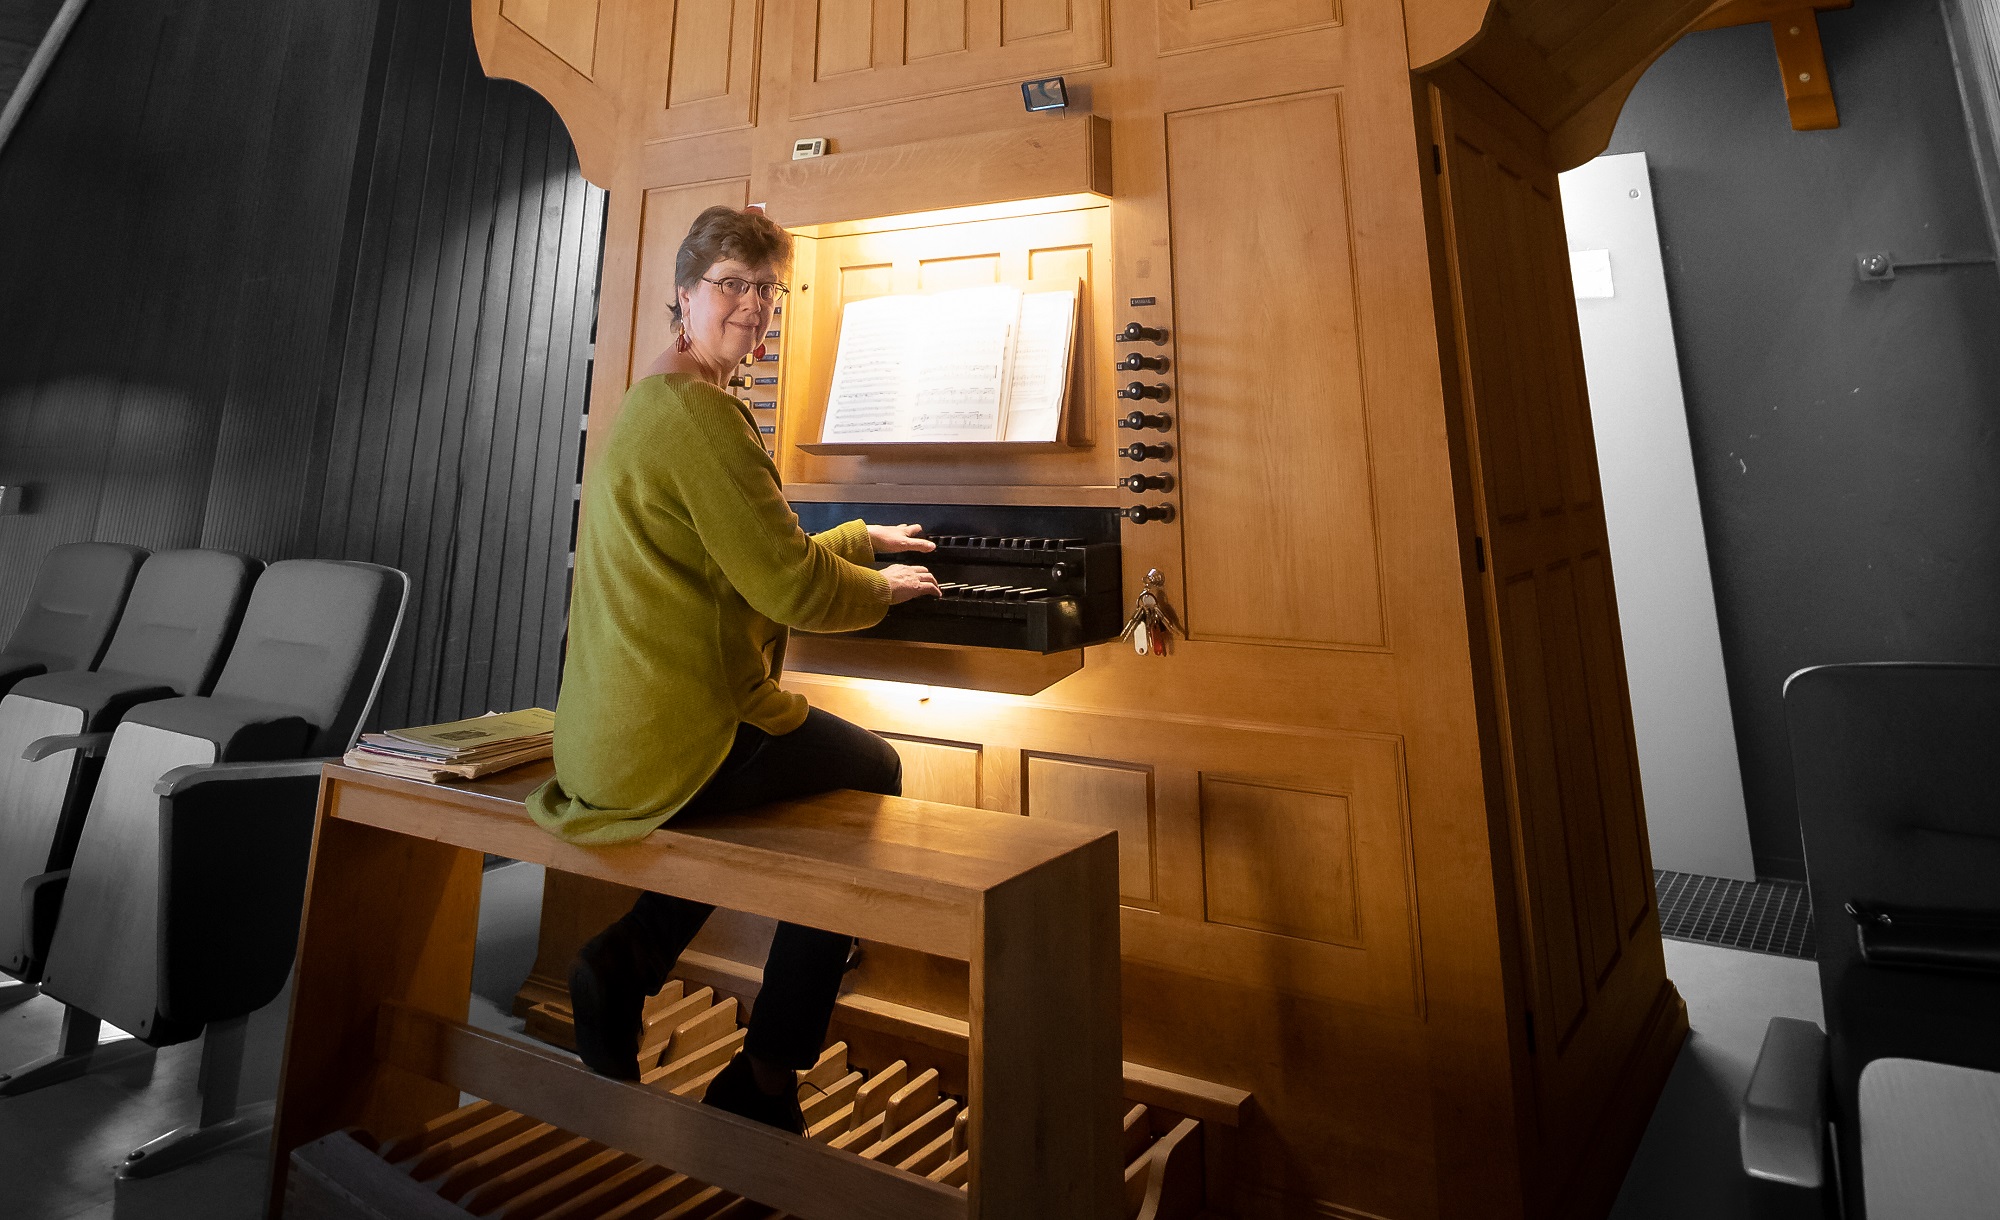 Aula organ can be heard in Italy